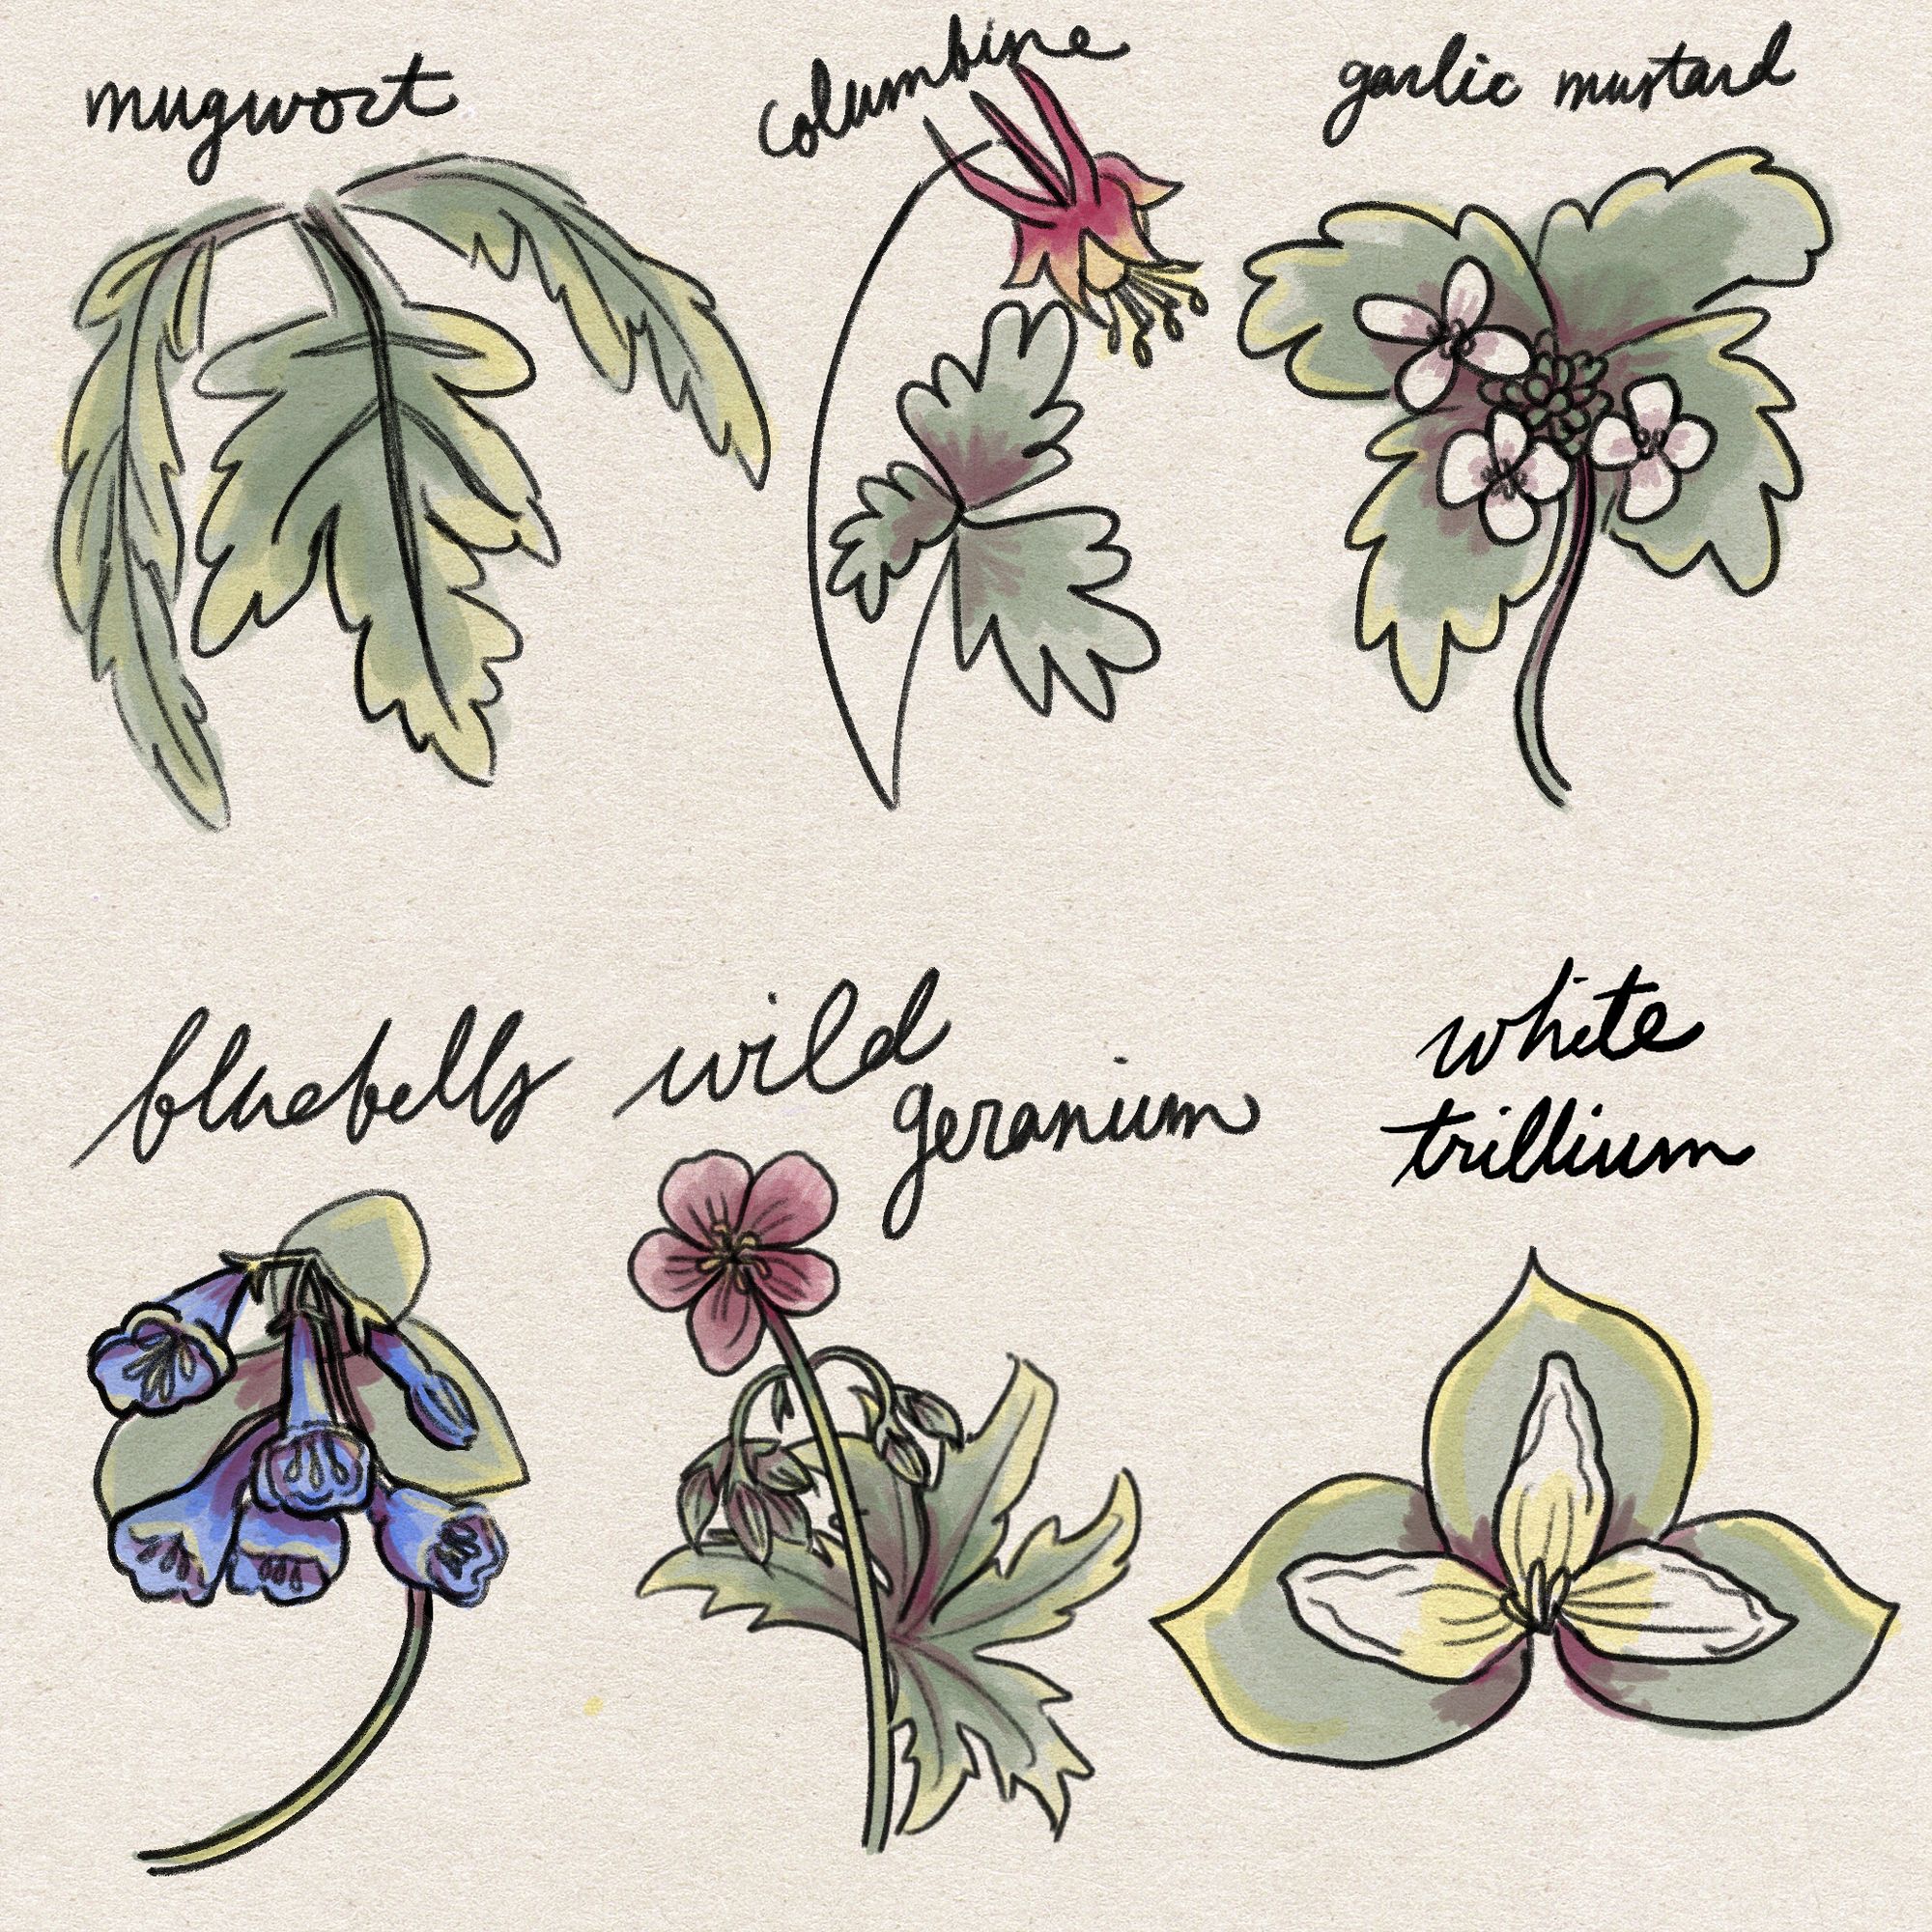 a drawing of mugwort, columbine, garlic mustard, bluebells, wild geranium, and white trillium